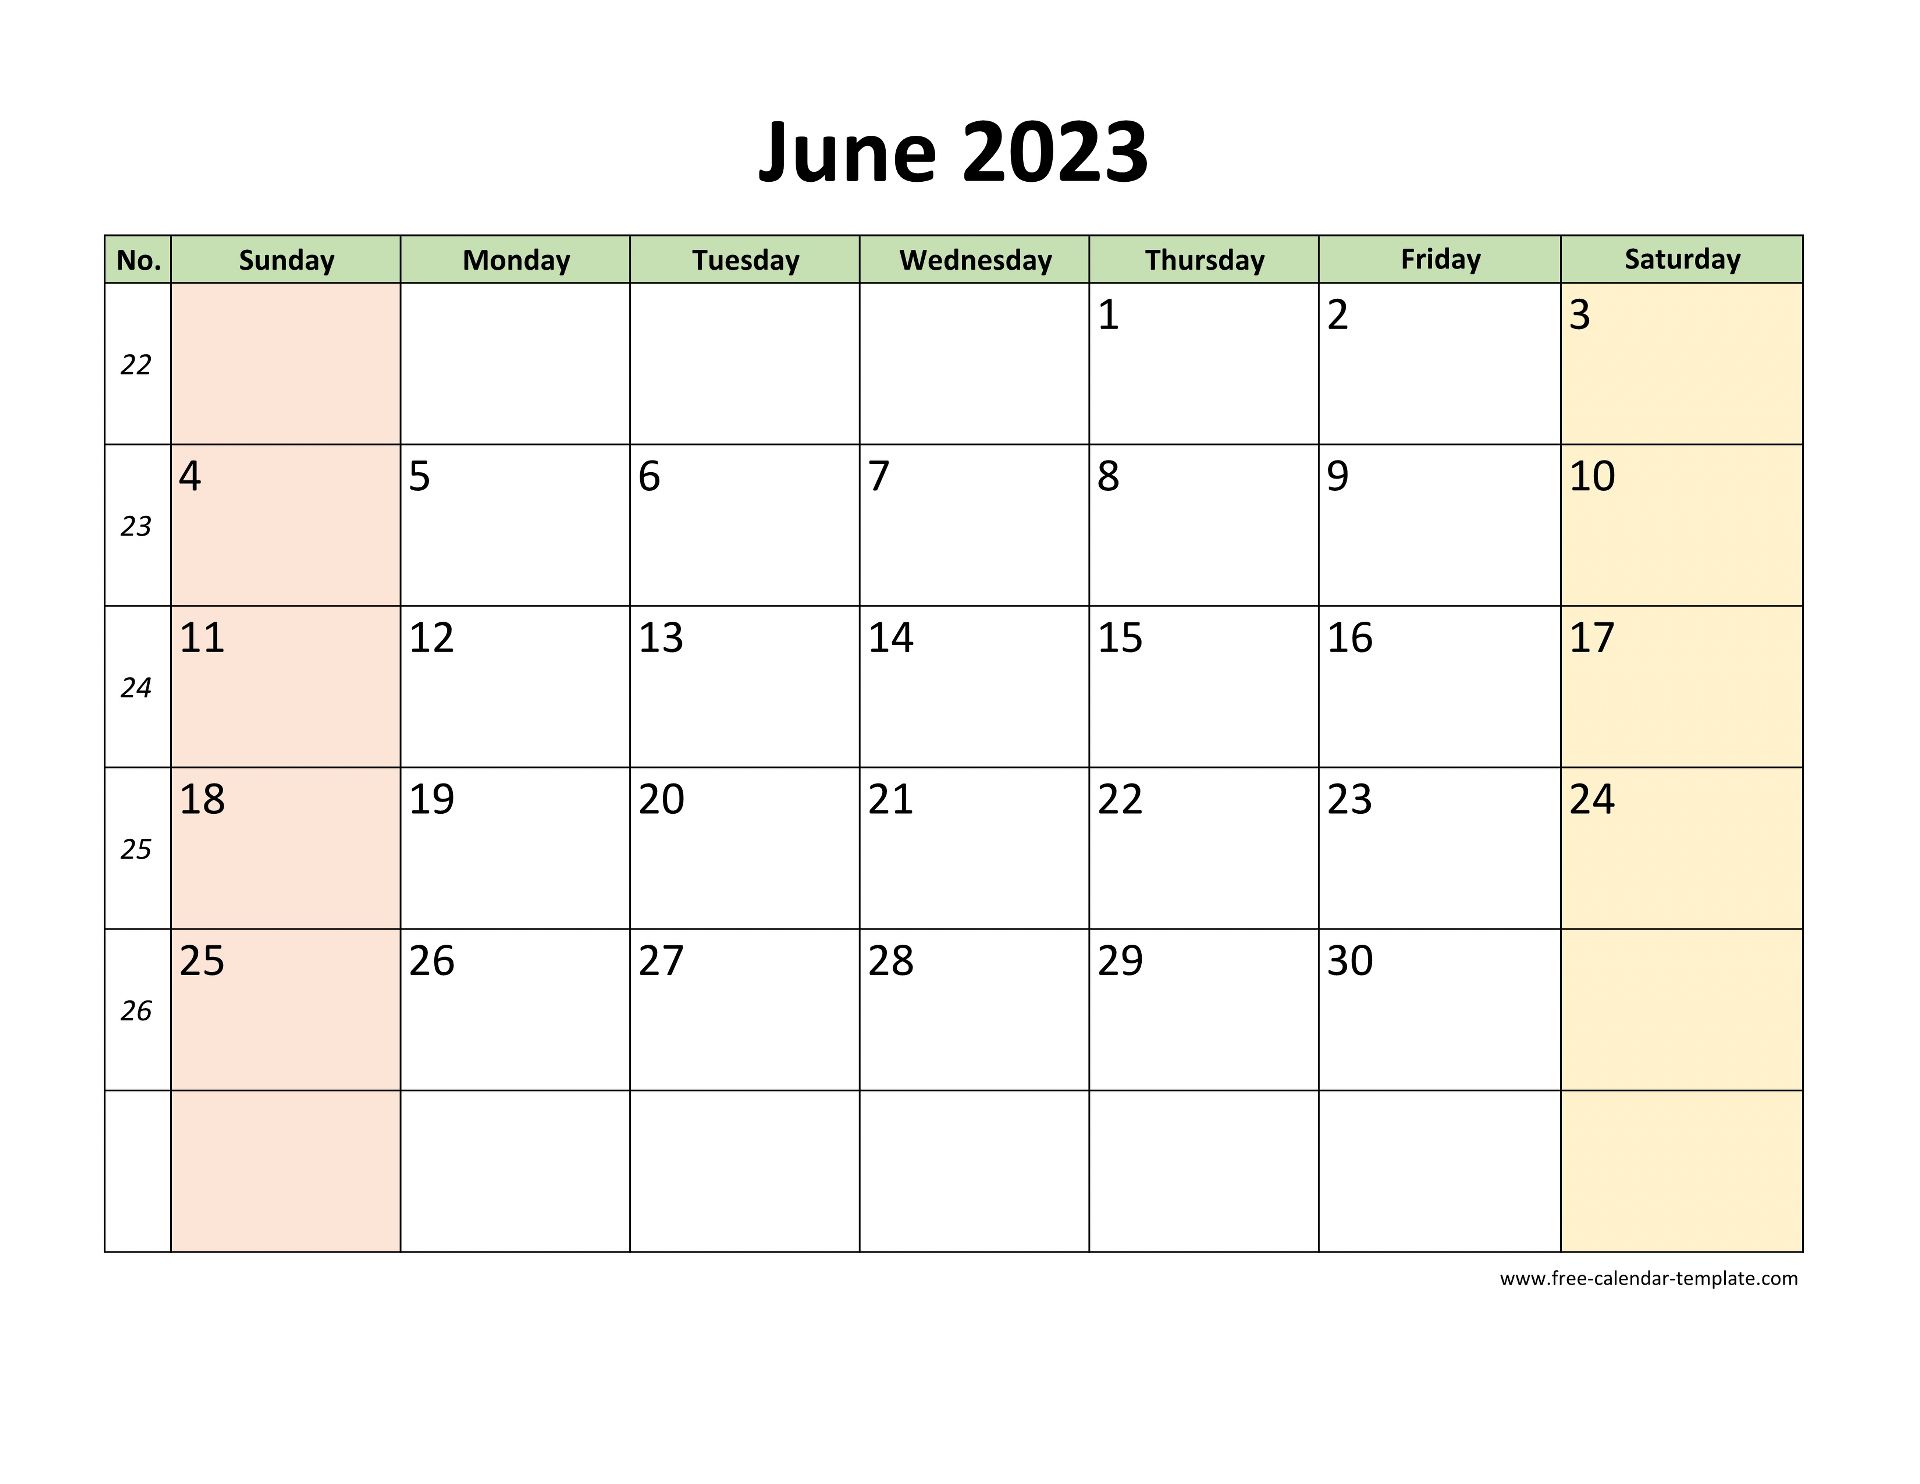 June 2023 Calendar Free Printable With Holidays June 2023 Calendar 9 